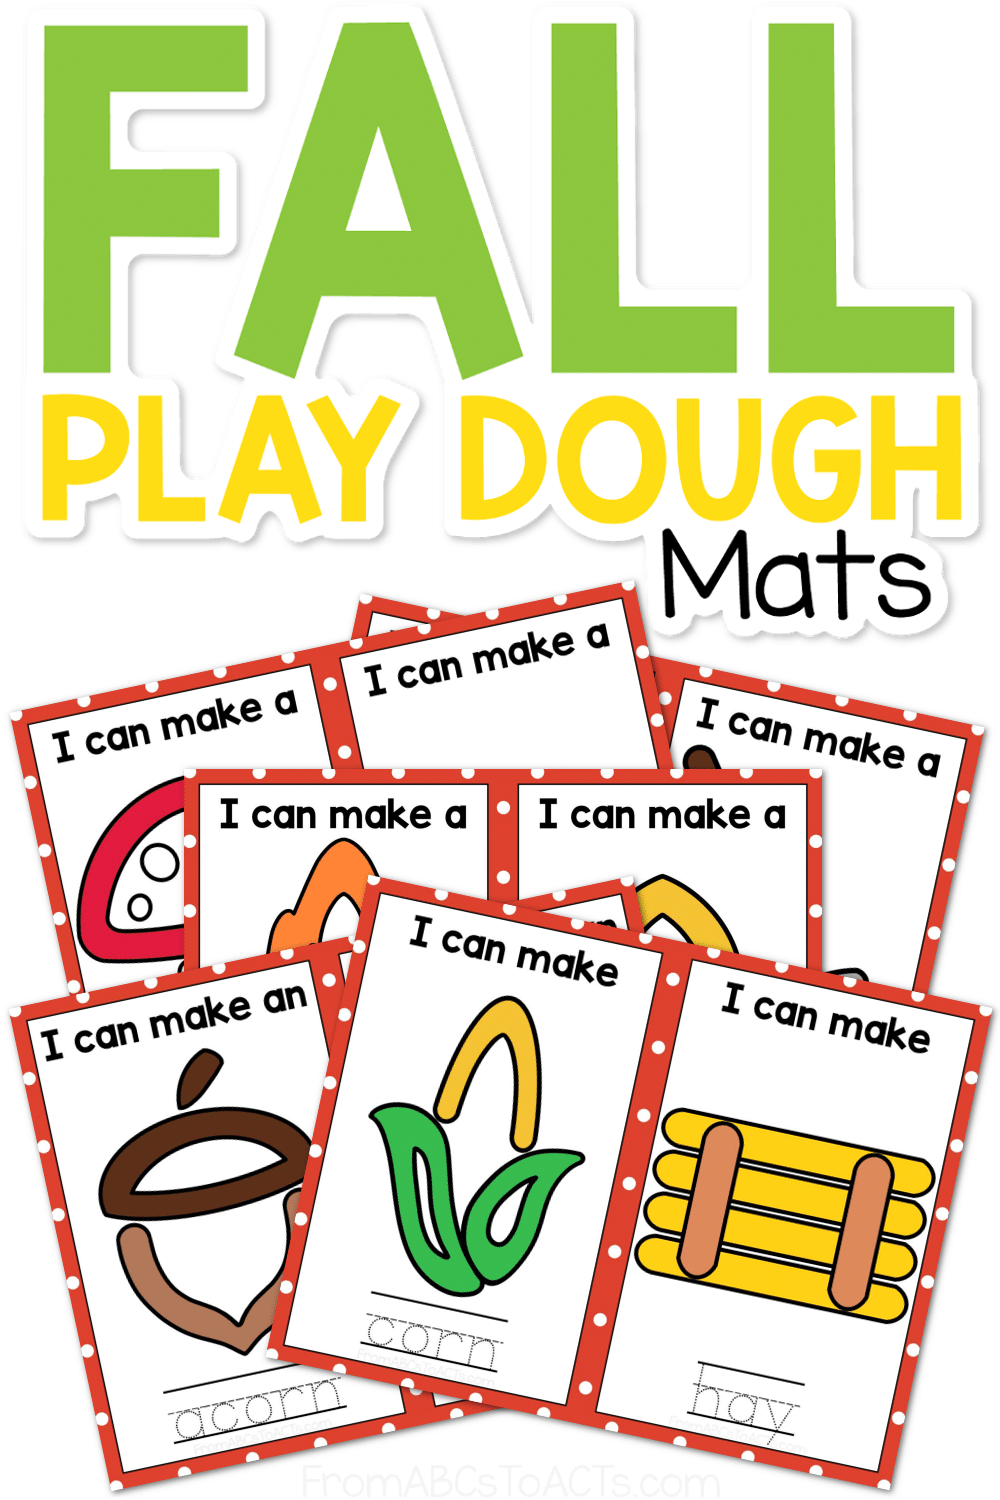 40 Play Dough Mats for Preschoolers